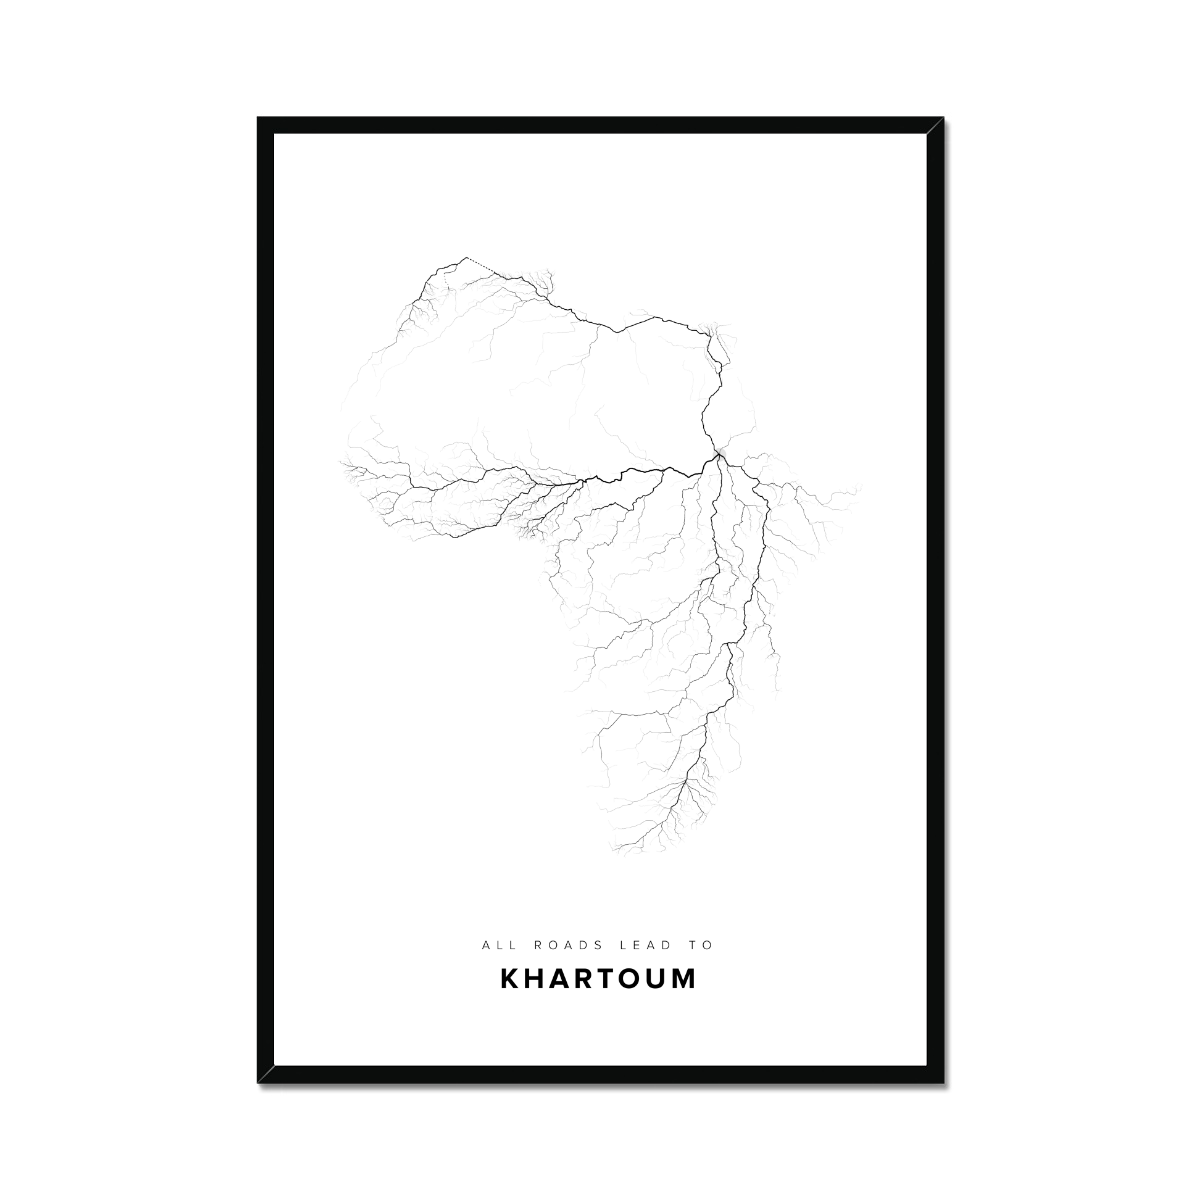 All roads lead to Khartoum (Sudan) Fine Art Map Print